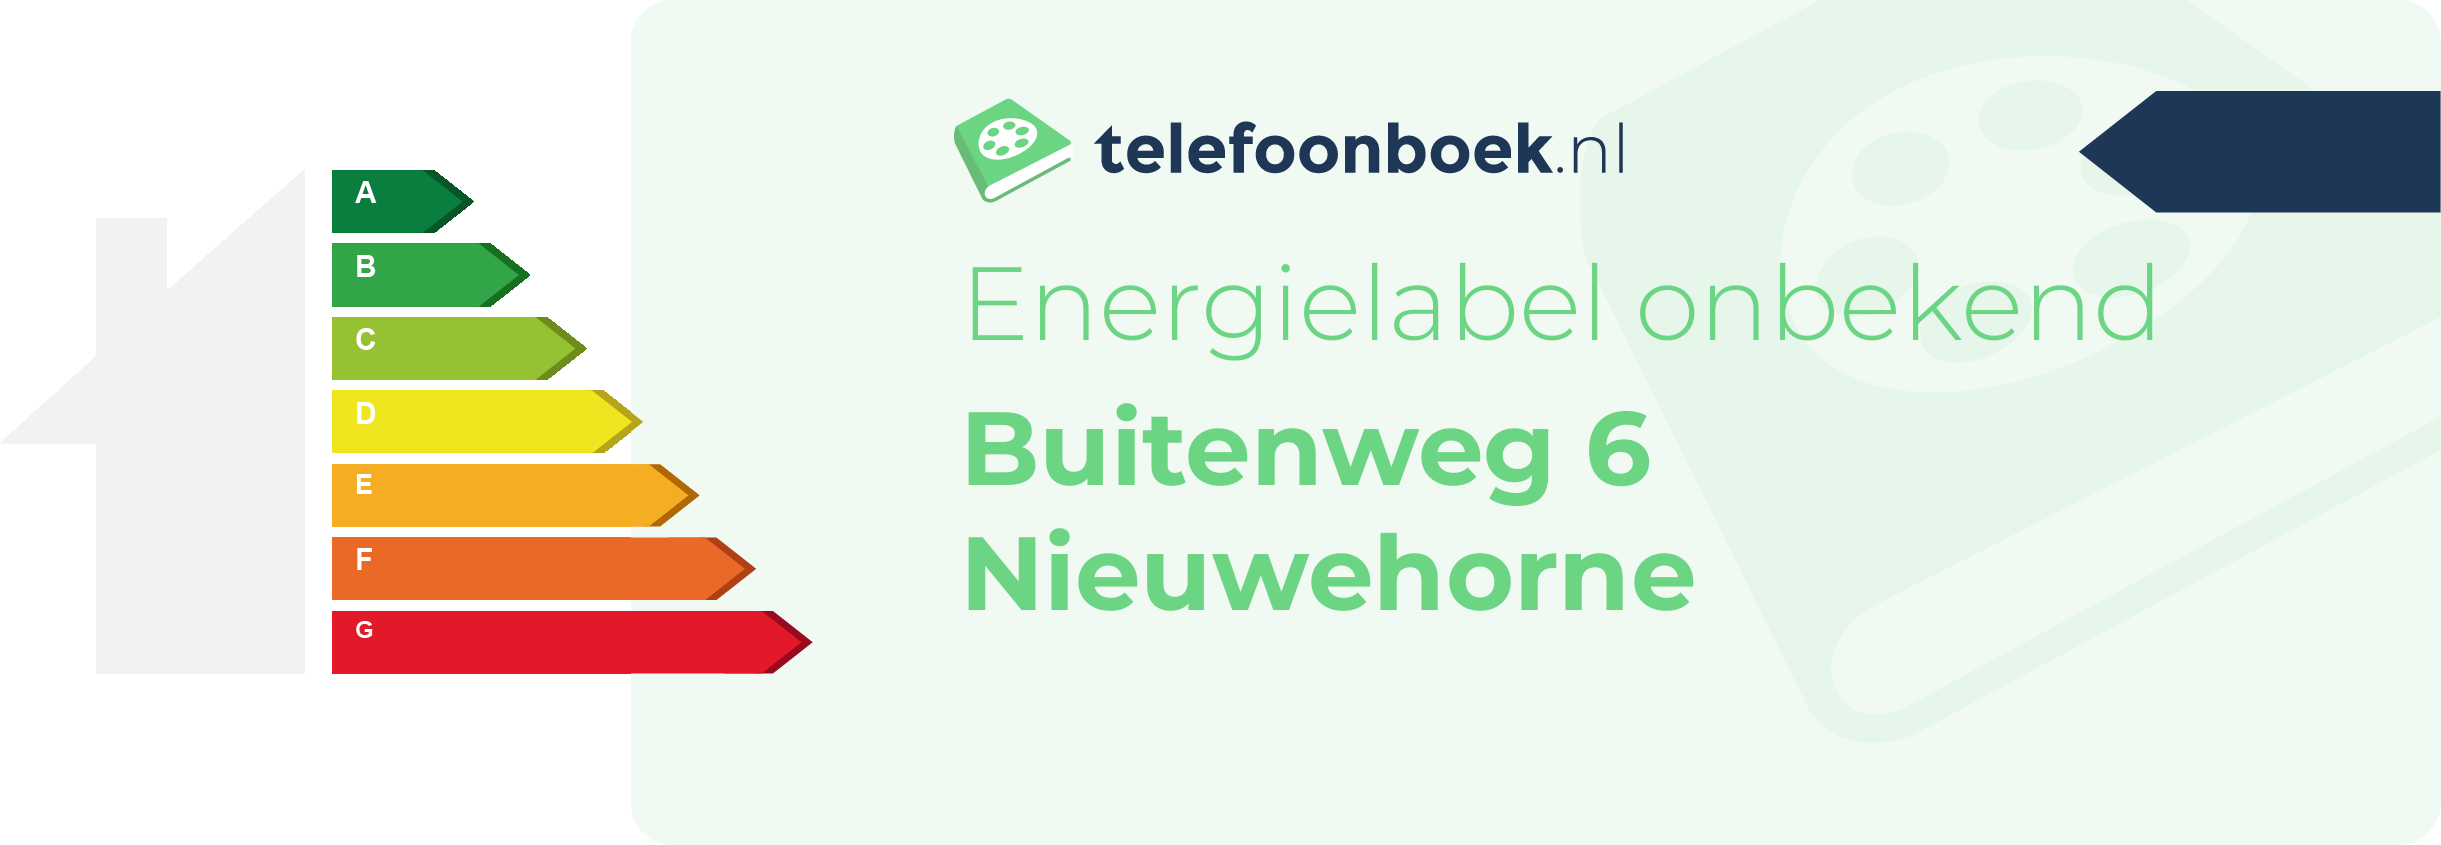 Energielabel Buitenweg 6 Nieuwehorne